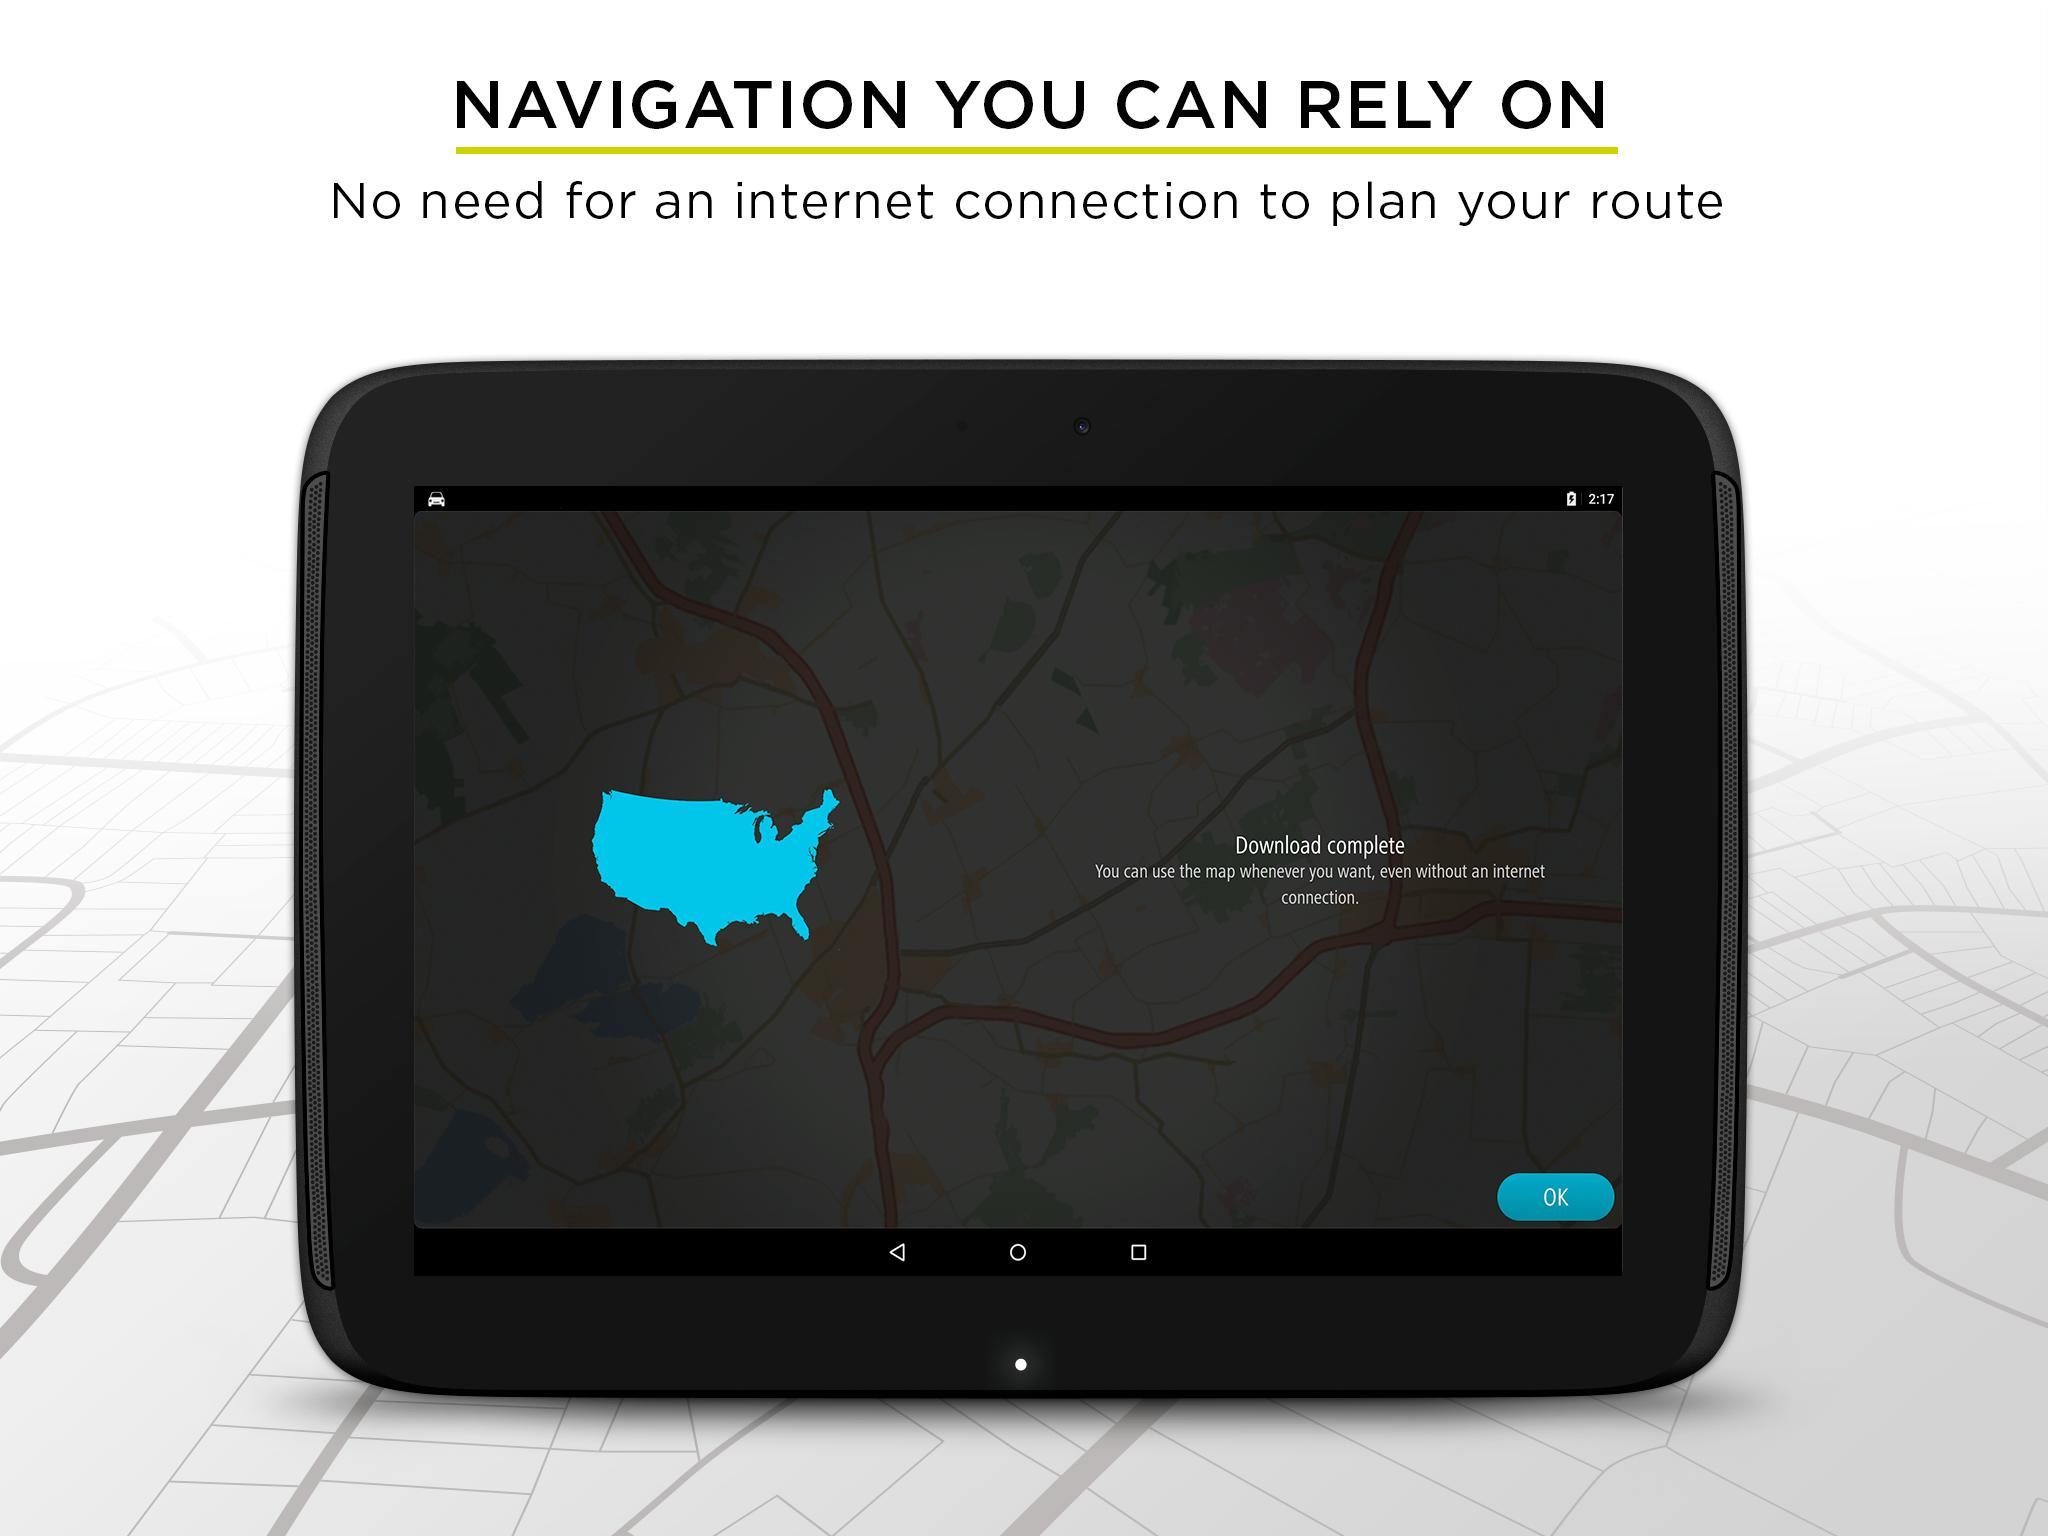 TomTom GPS Navigation - Live Traffic Alerts & Maps 2.0.4 Screenshot 13